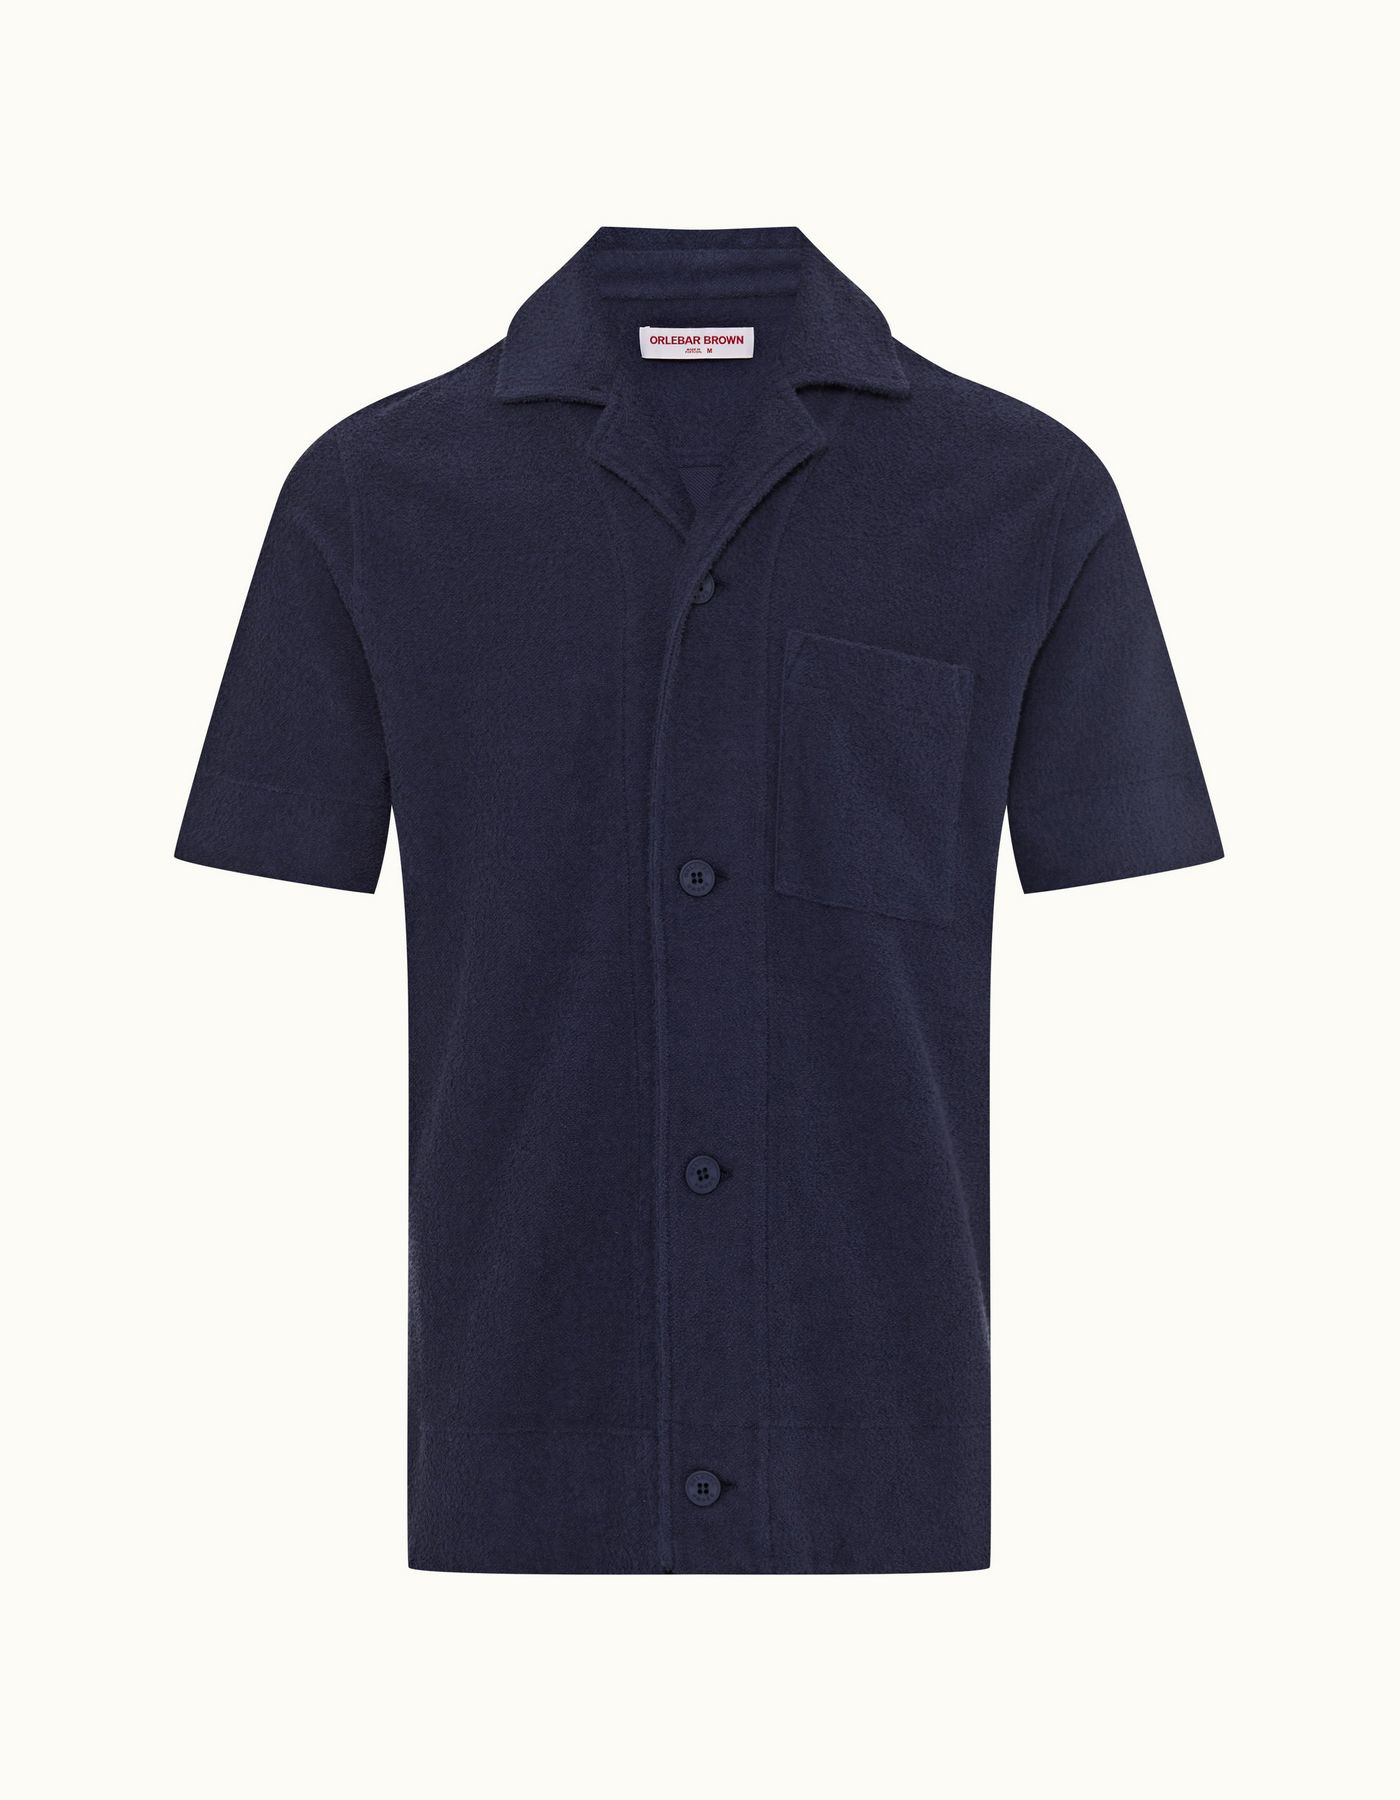 Lazar Towelling - Mens Lagoon Blue Capri Collar Double-Faced Towelling Shirt